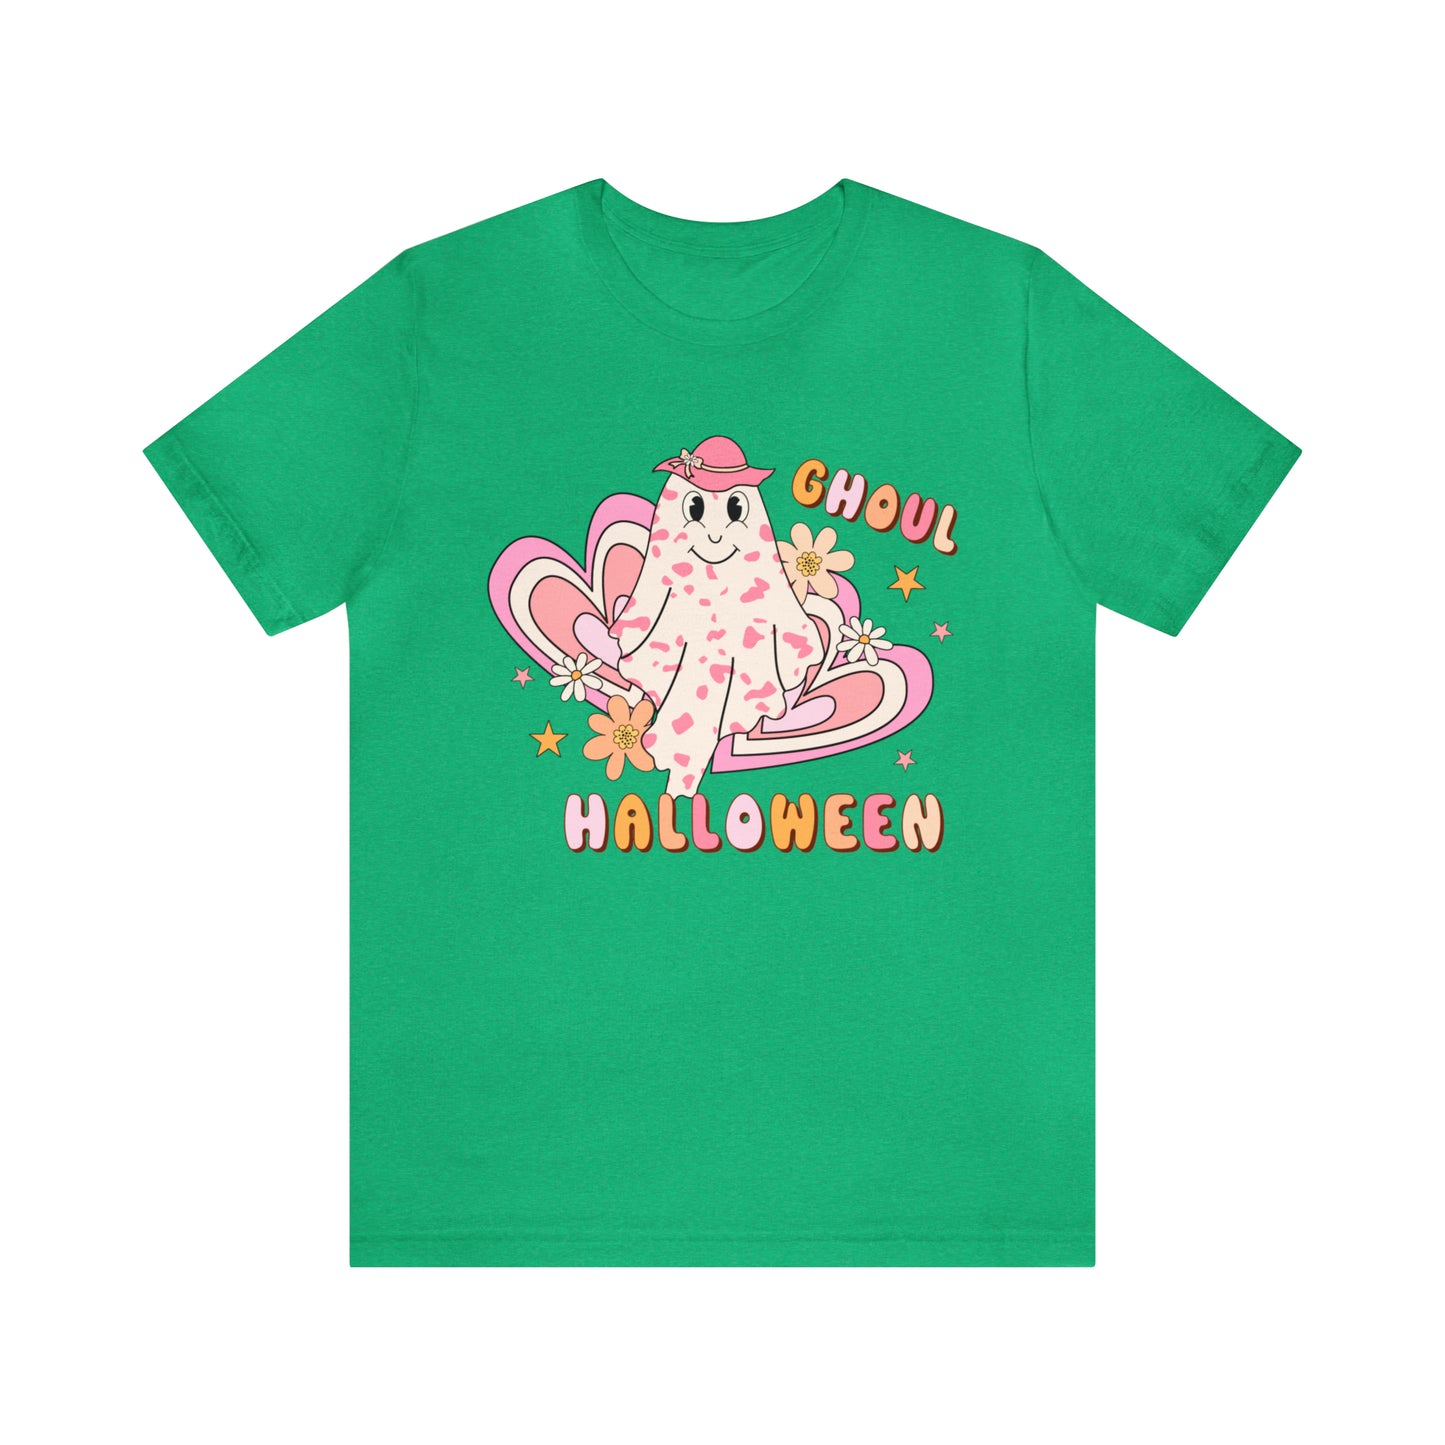 Lets Go Ghouls Shirt, Spooky Season Tee, Retro Halloween Cowgirl Shirt, Cowgirl Halloween Shirt, Vintage Ghost Shirt, T760